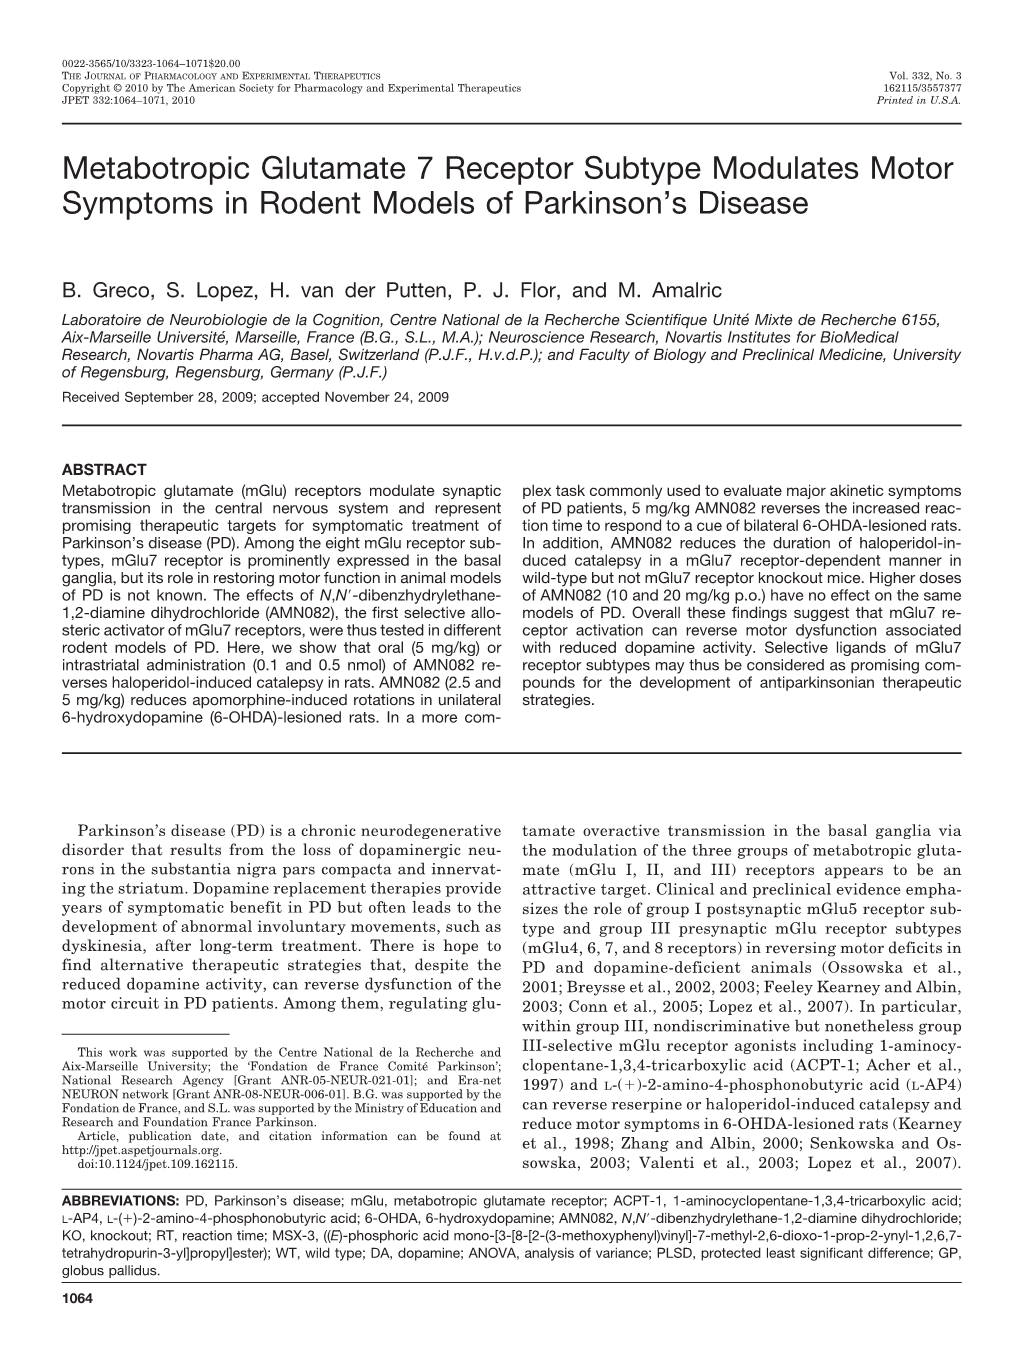 Metabotropic Glutamate 7 Receptor Subtype Modulates Motor Symptoms in Rodent Models of Parkinson’S Disease